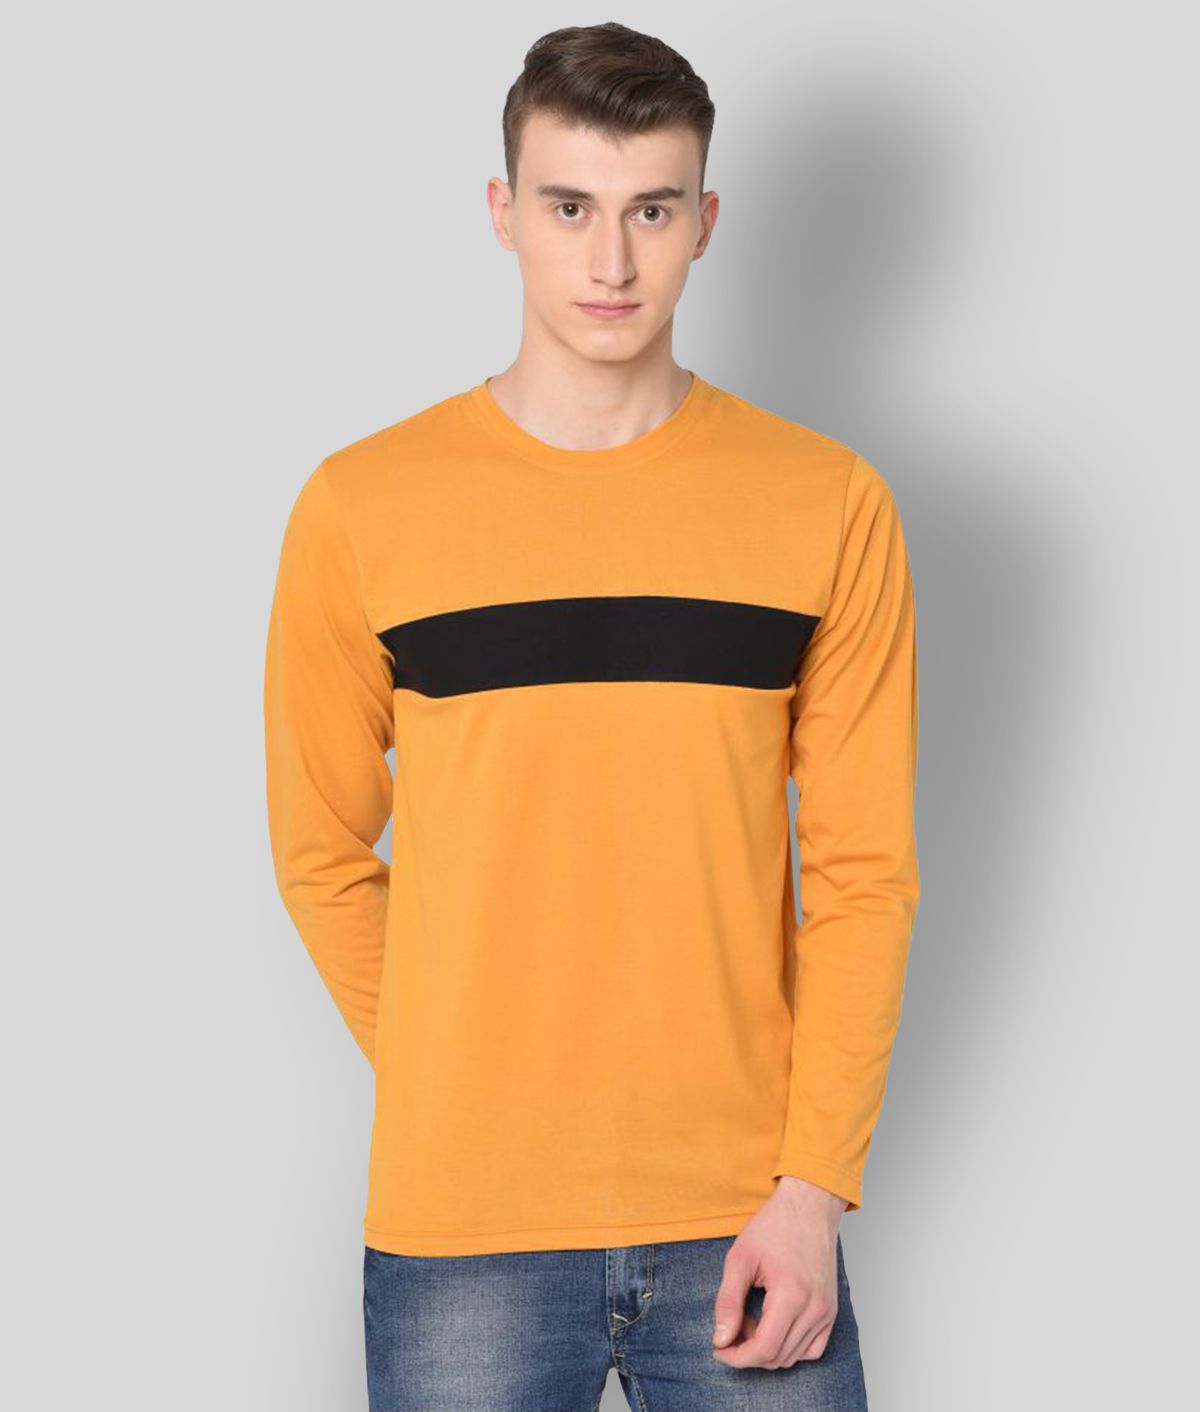     			Glito - Yellow Cotton Blend Regular Fit Men's T-Shirt ( Pack of 1 )